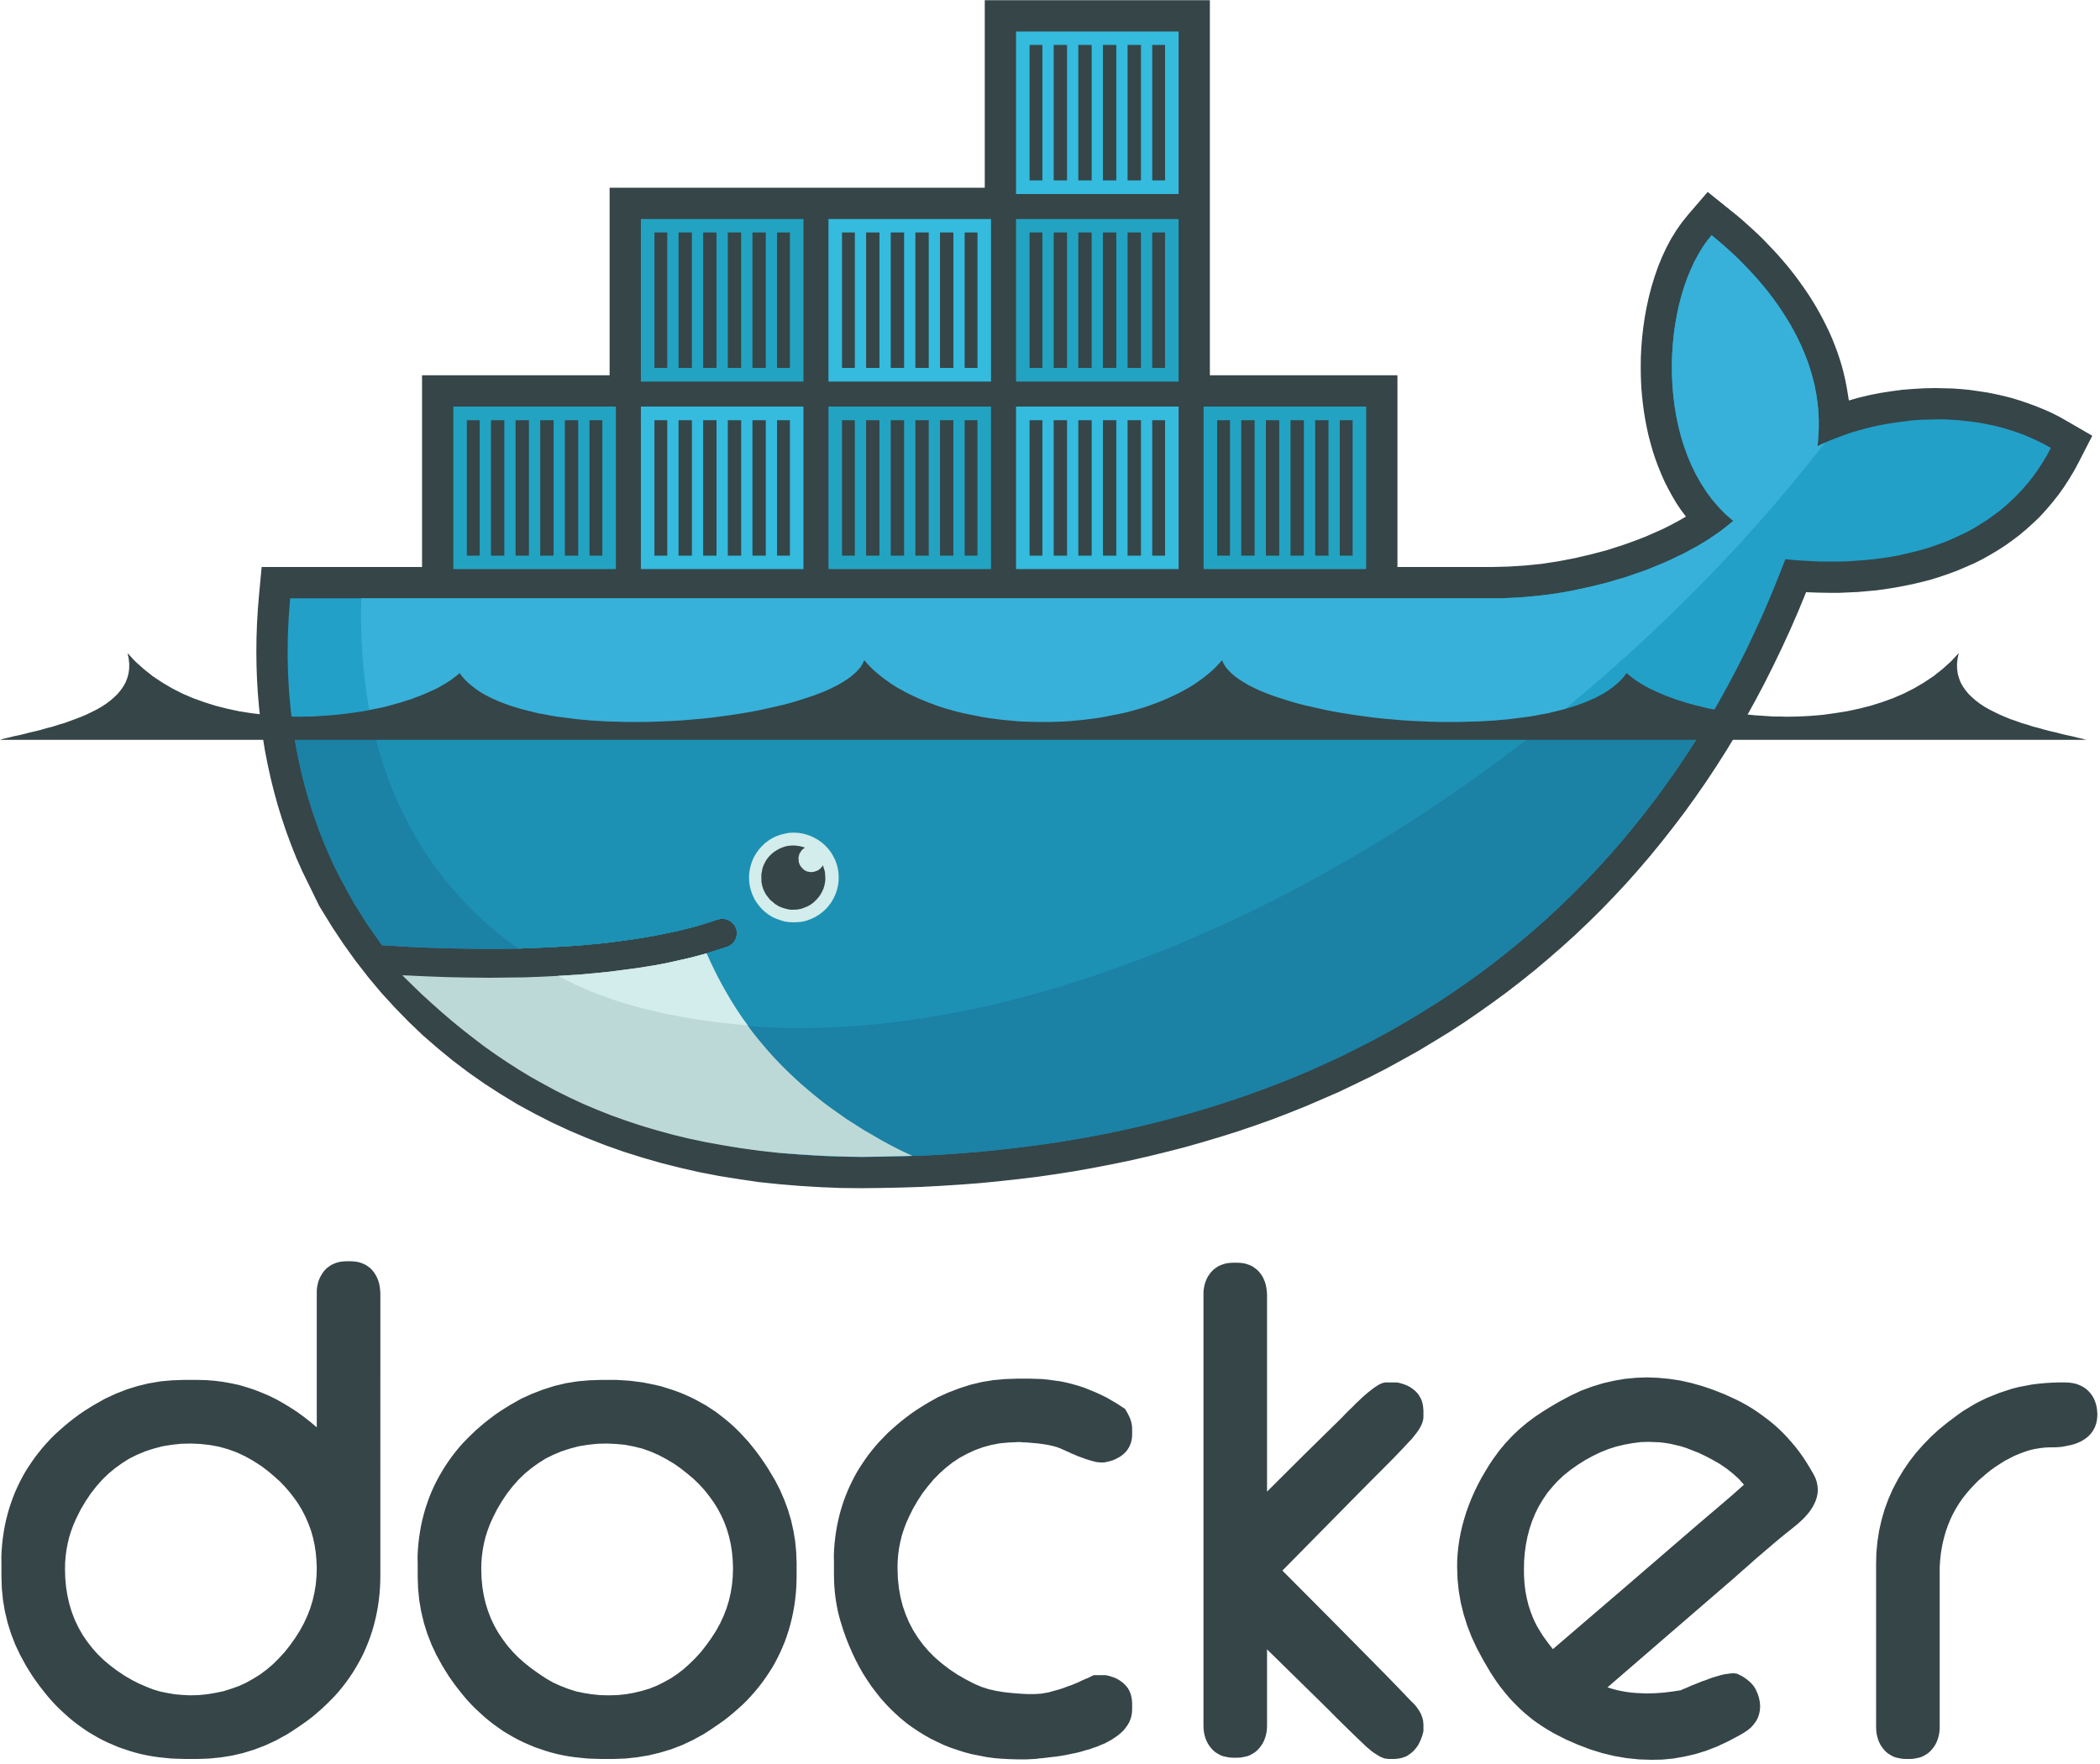 [docker] Nginxを利用して1つのホストの複数のWEBサーバを構築する方法